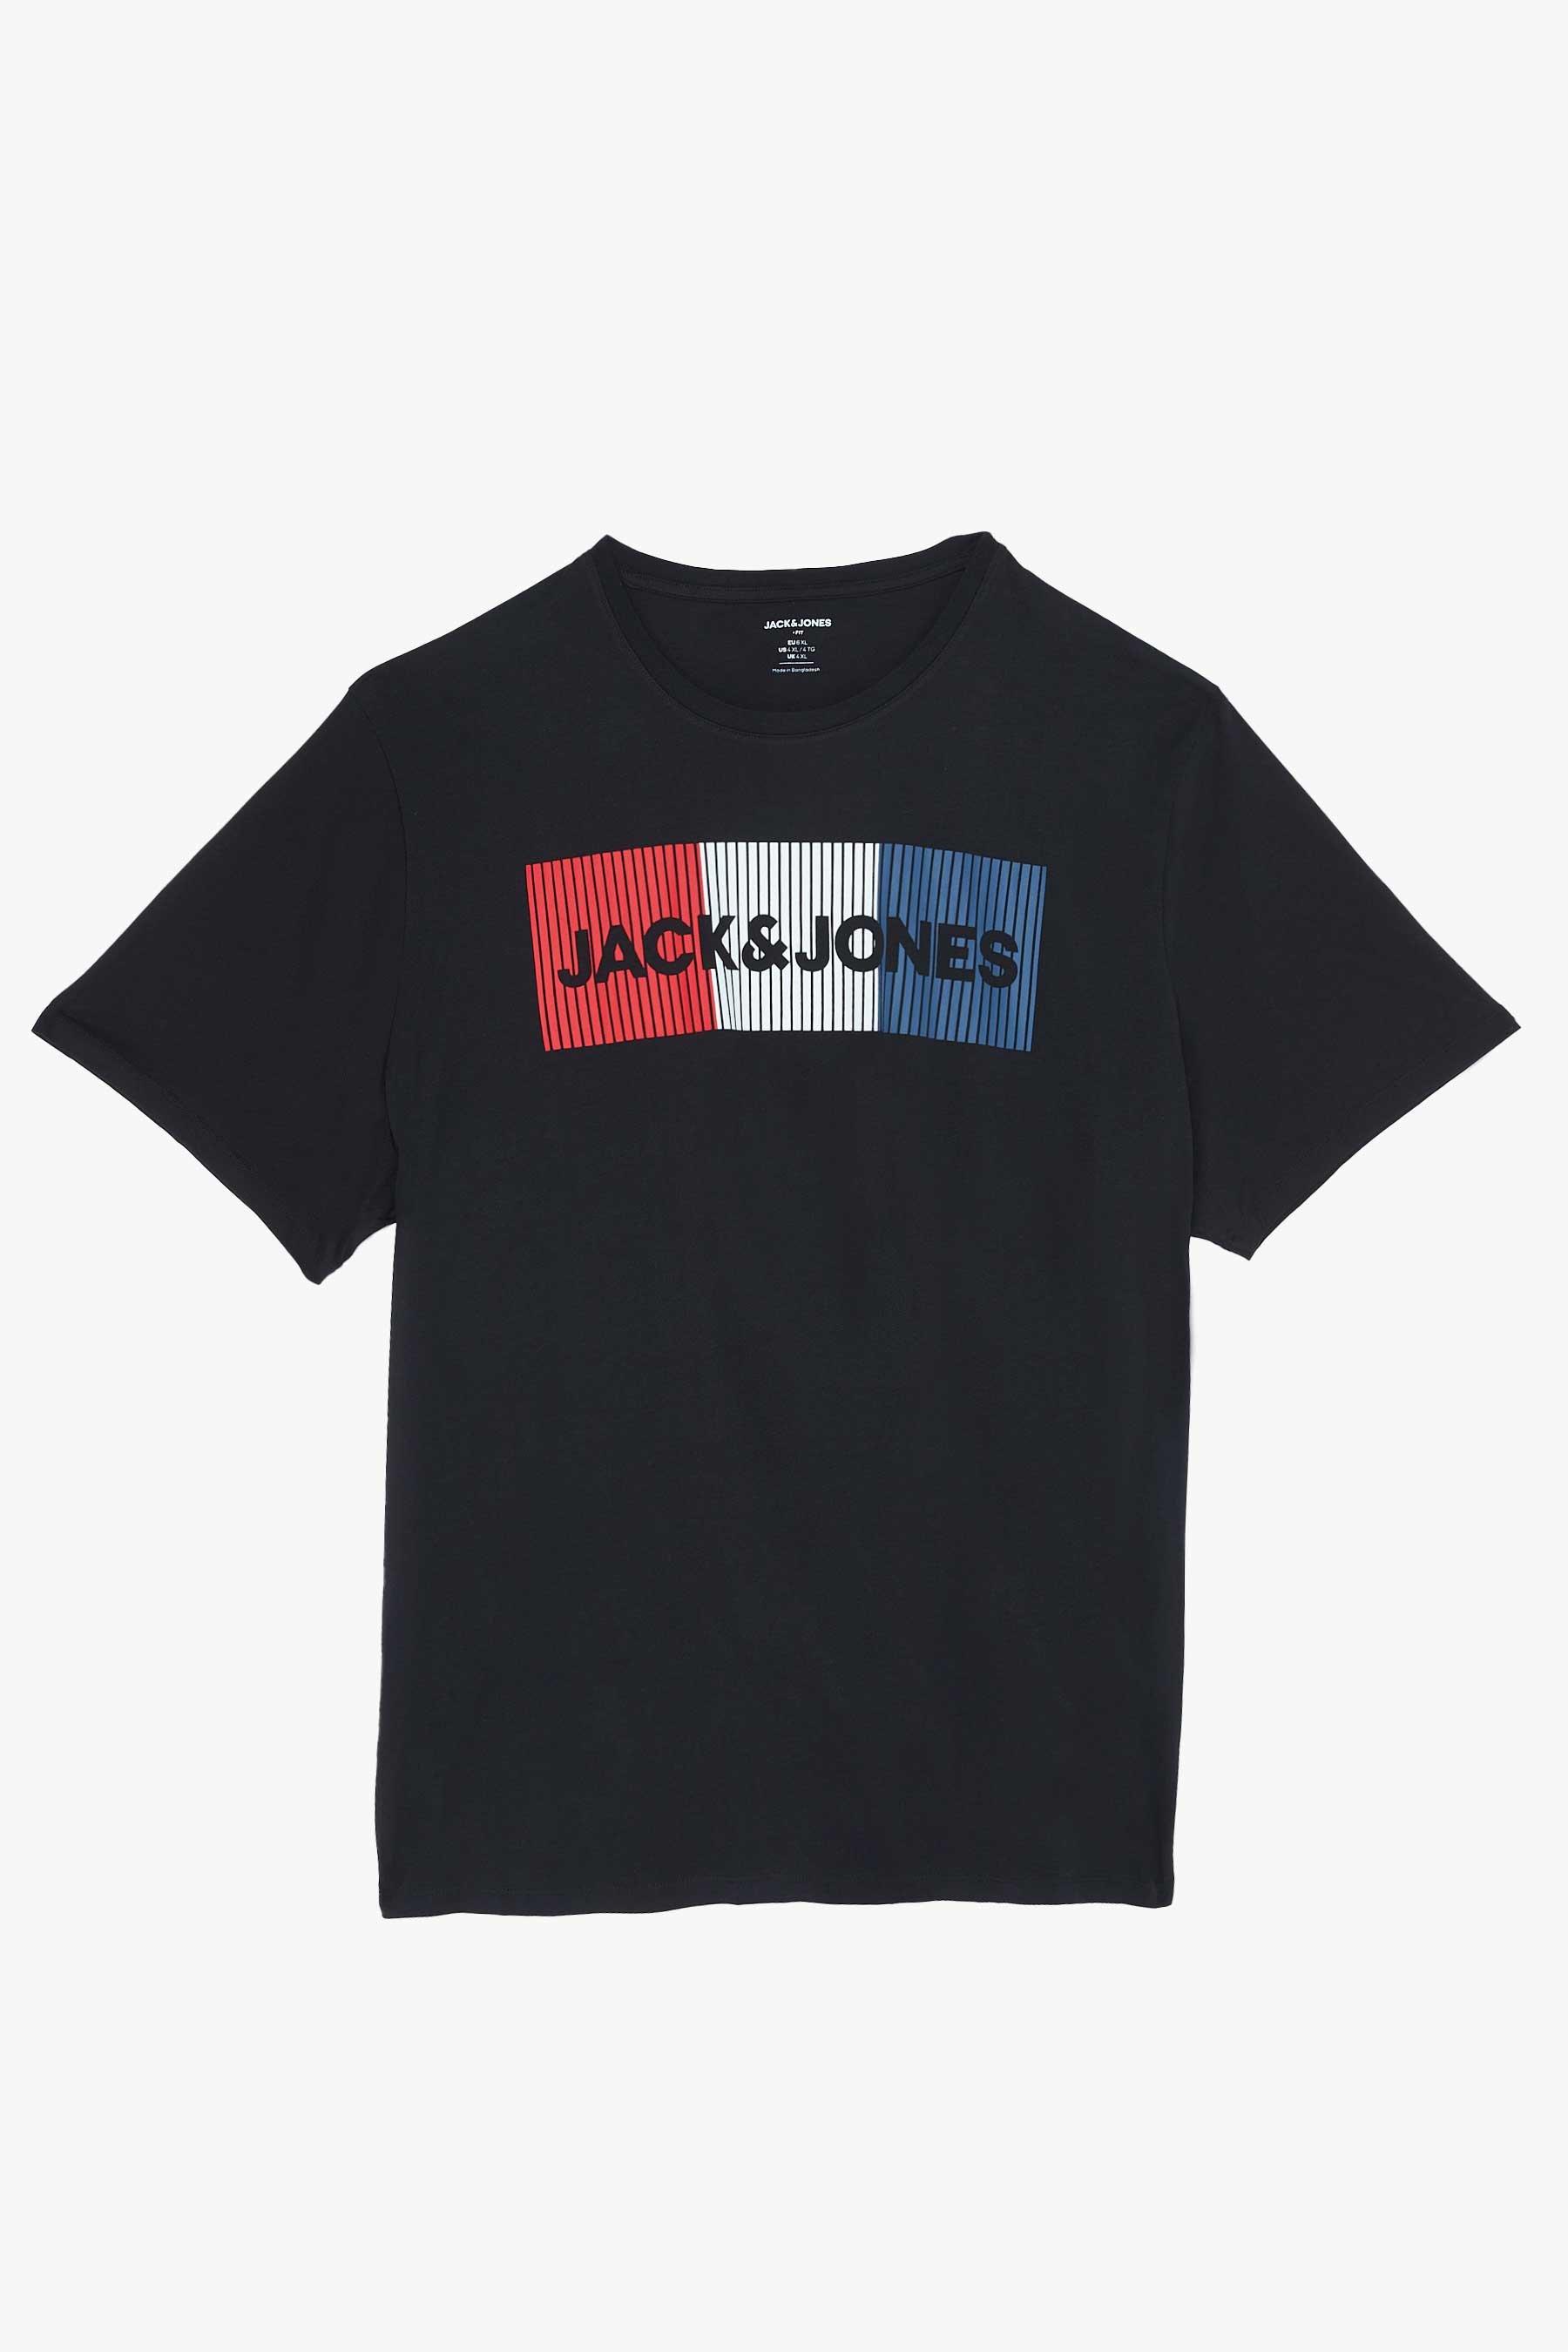 jack and jones big and tall black corp logo t-shirt - mens - size: 2xl